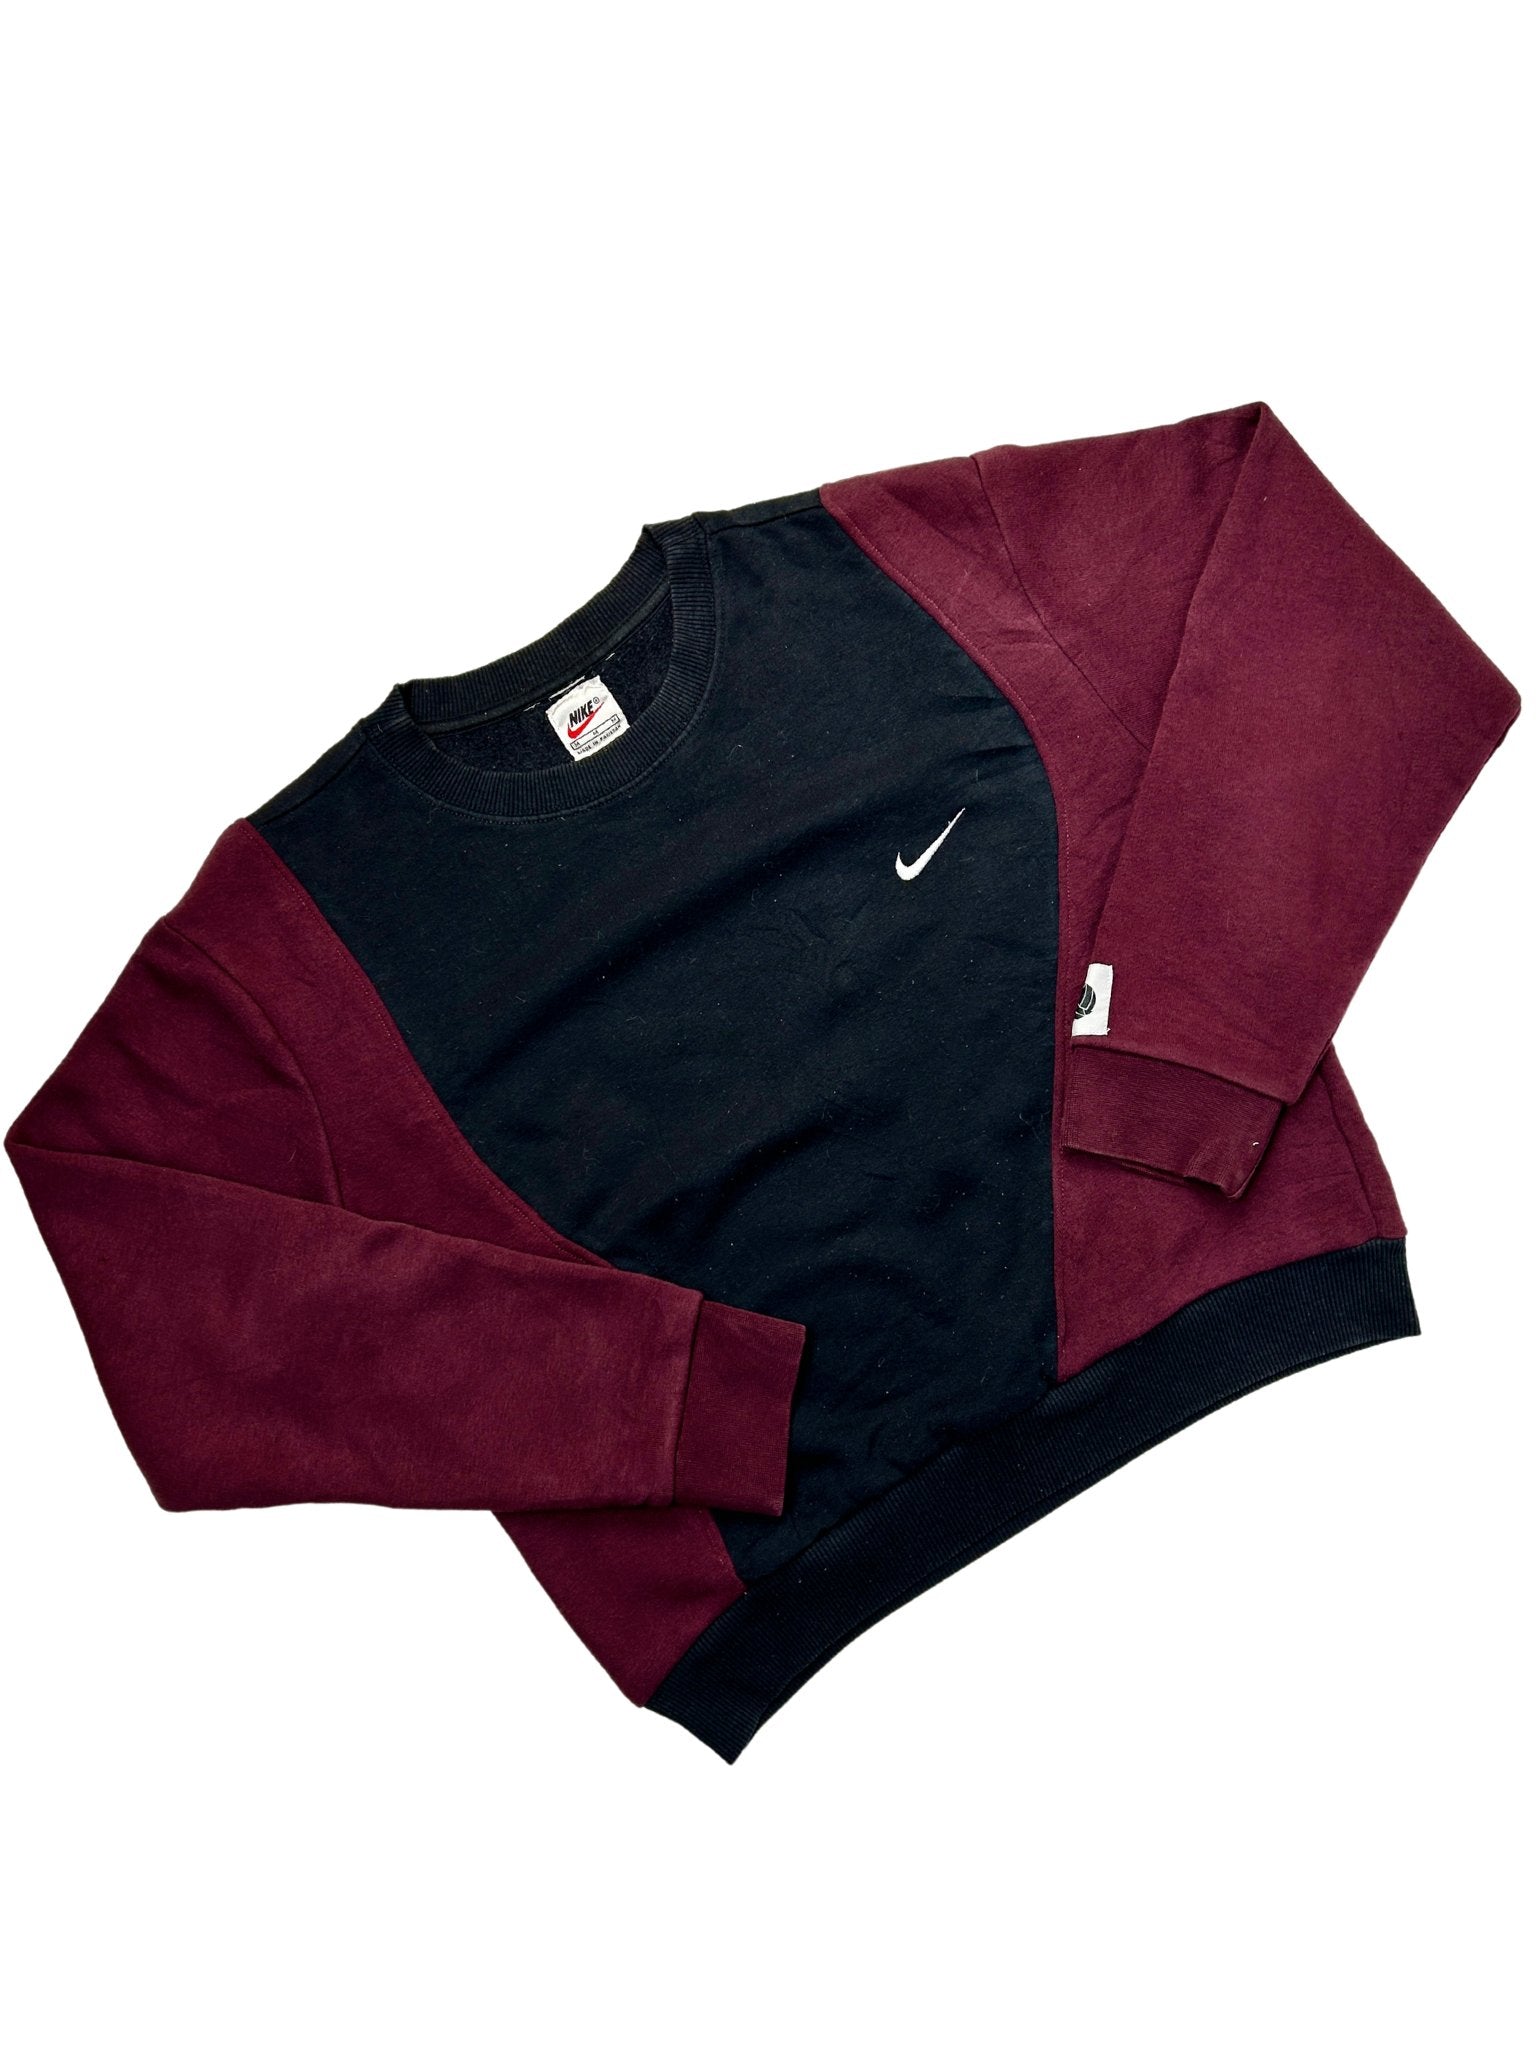 Reworked Nike Sweatshirt #25 (Women's S)-Unwanted FC-stride